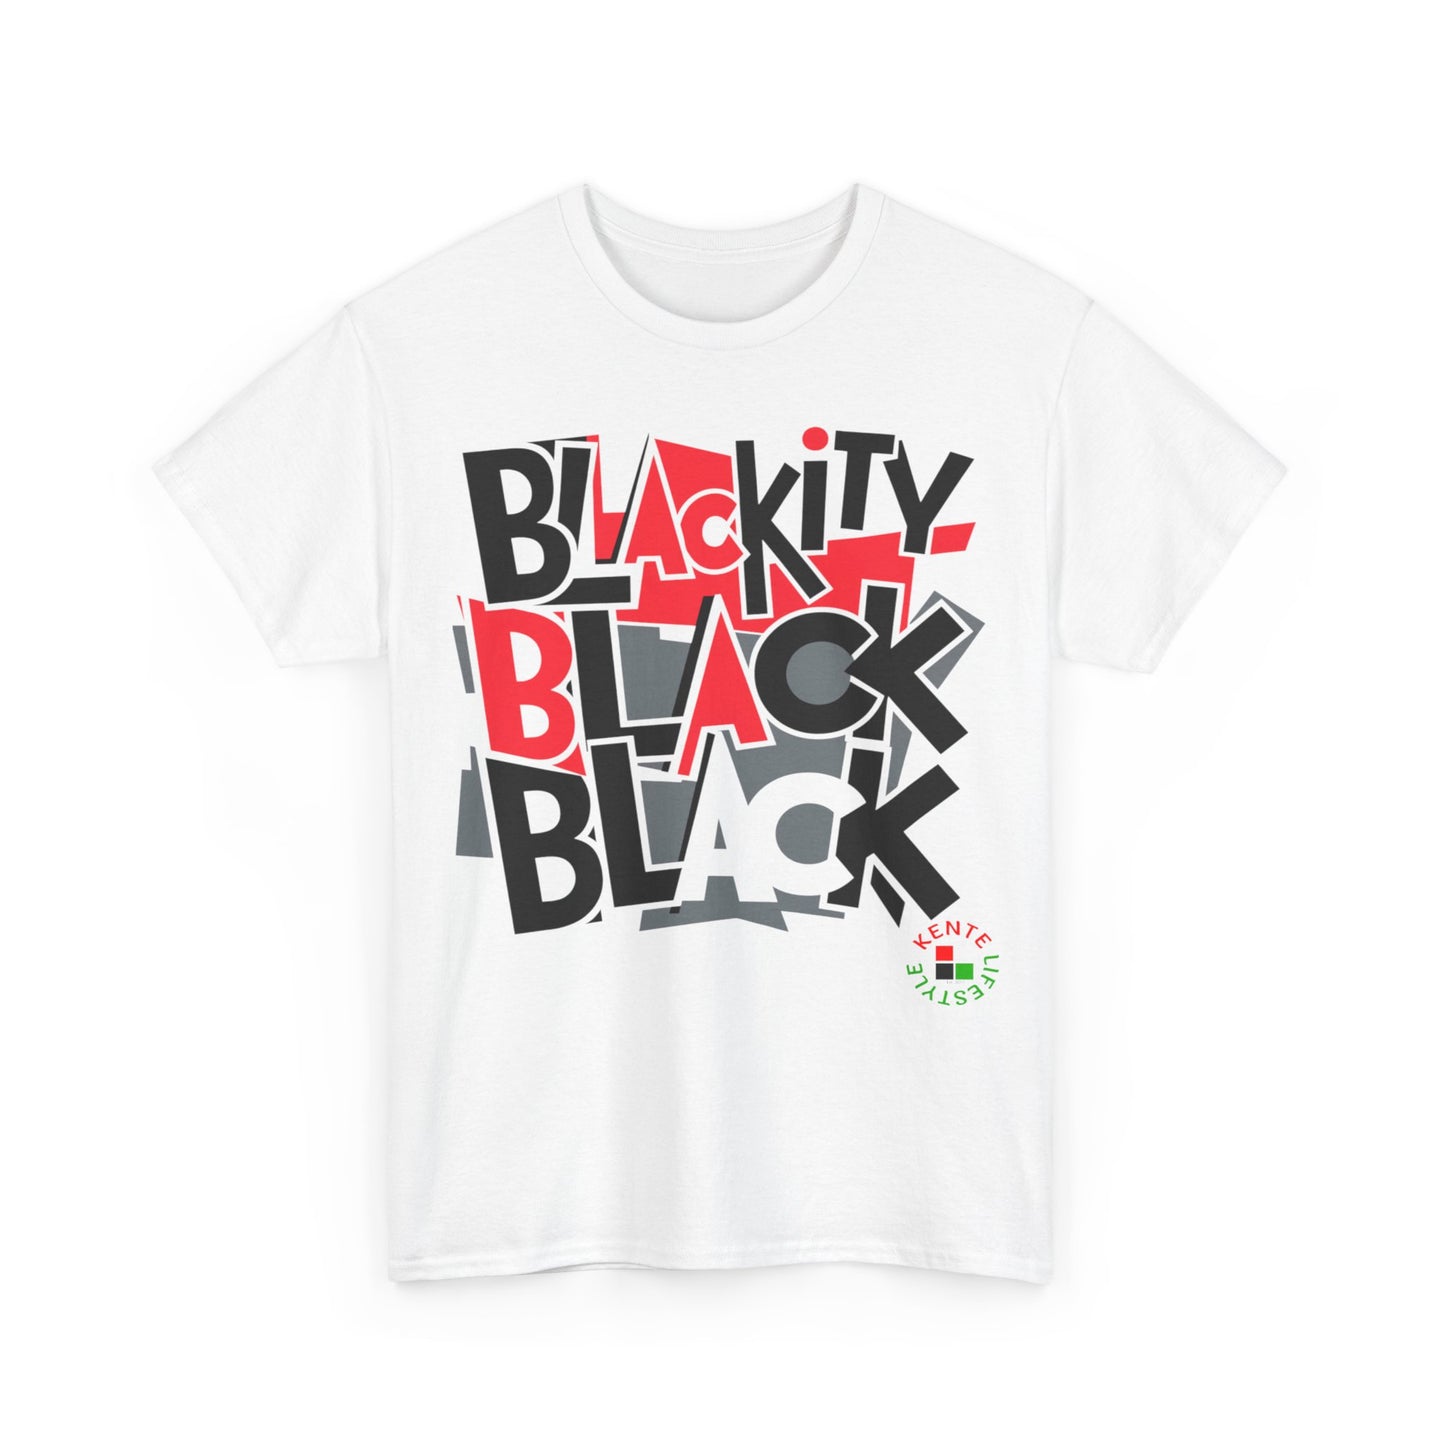 "Blackity, Black Black" -- T-shirt